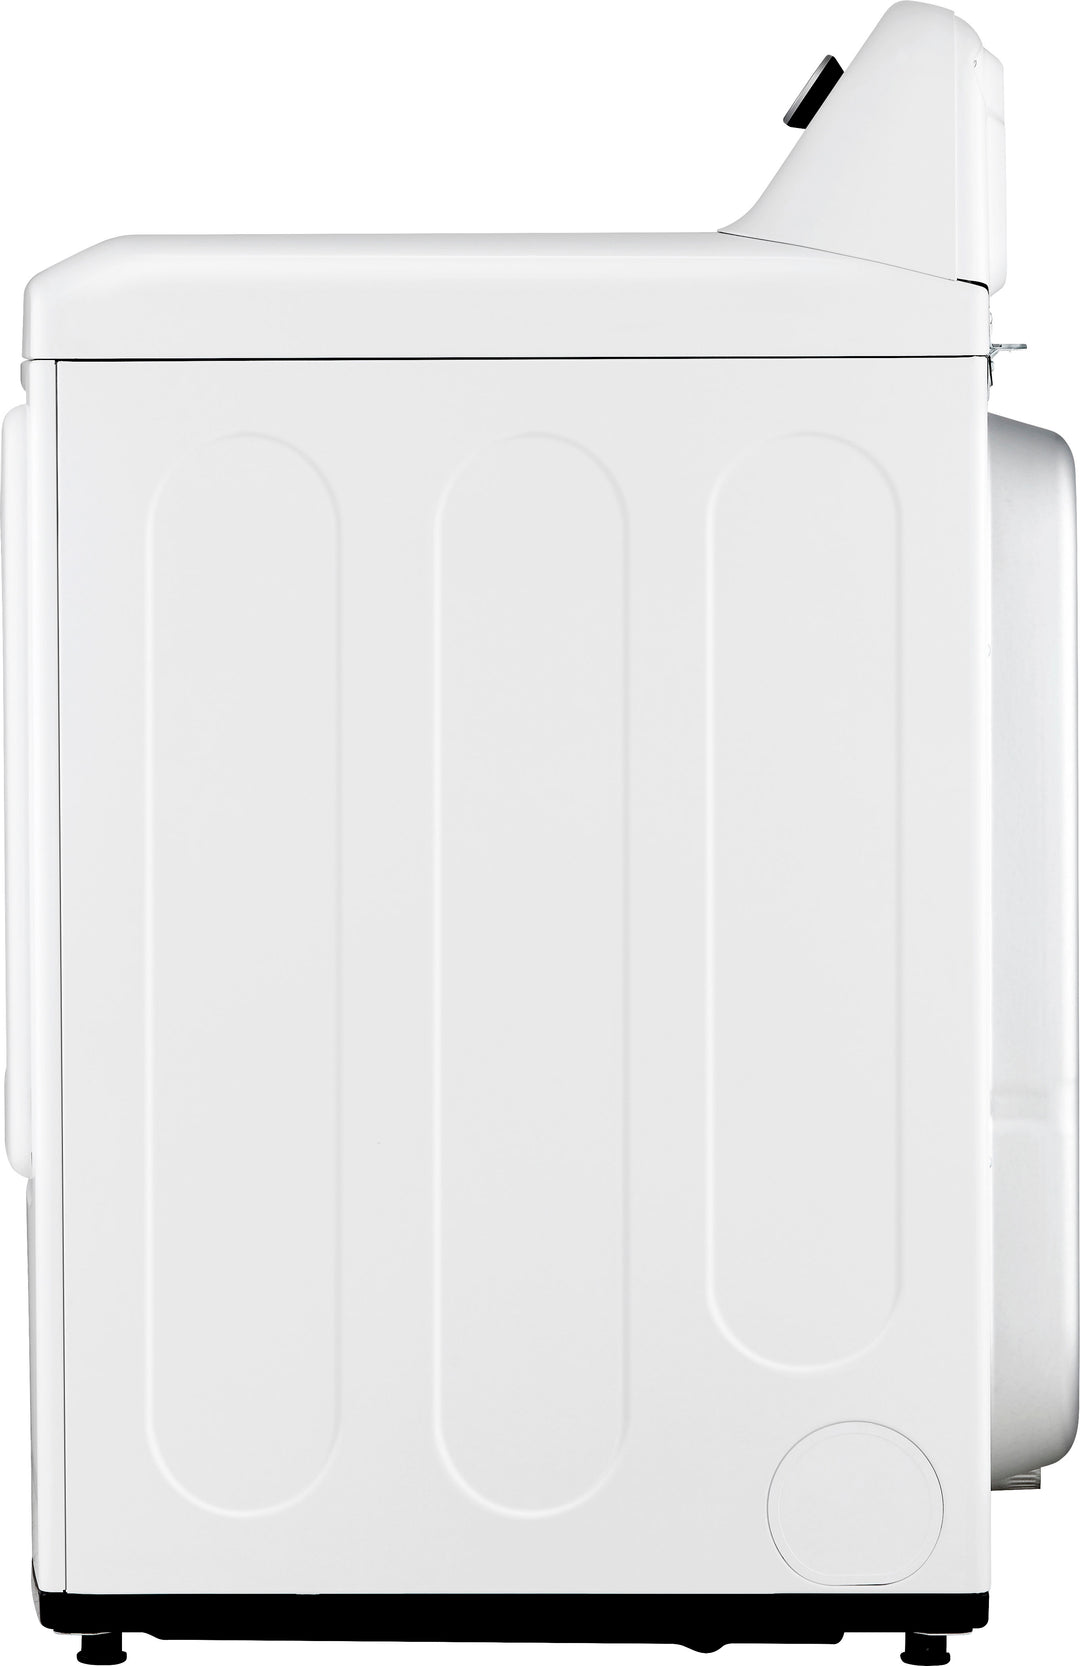 LG - 7.3 Cu. Ft. Smart Gas Dryer with EasyLoad Door - White_4